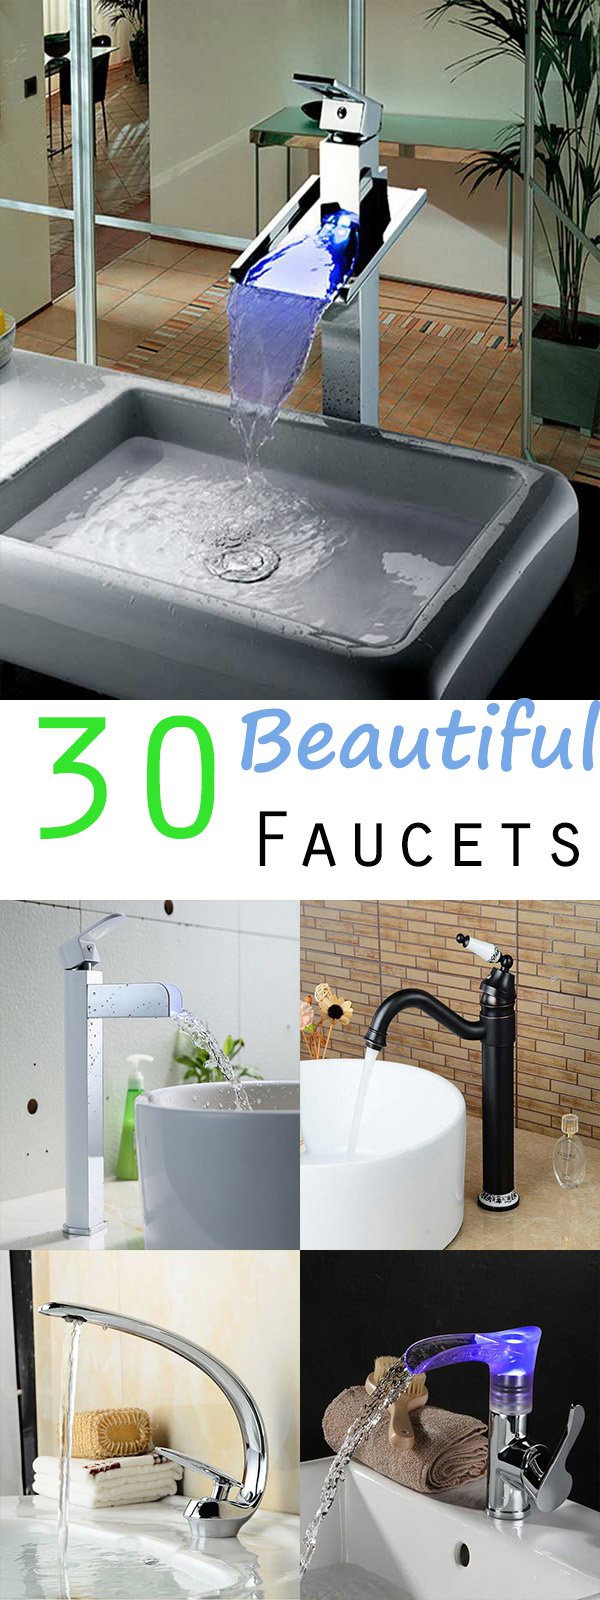 30 Beautiful Faucets